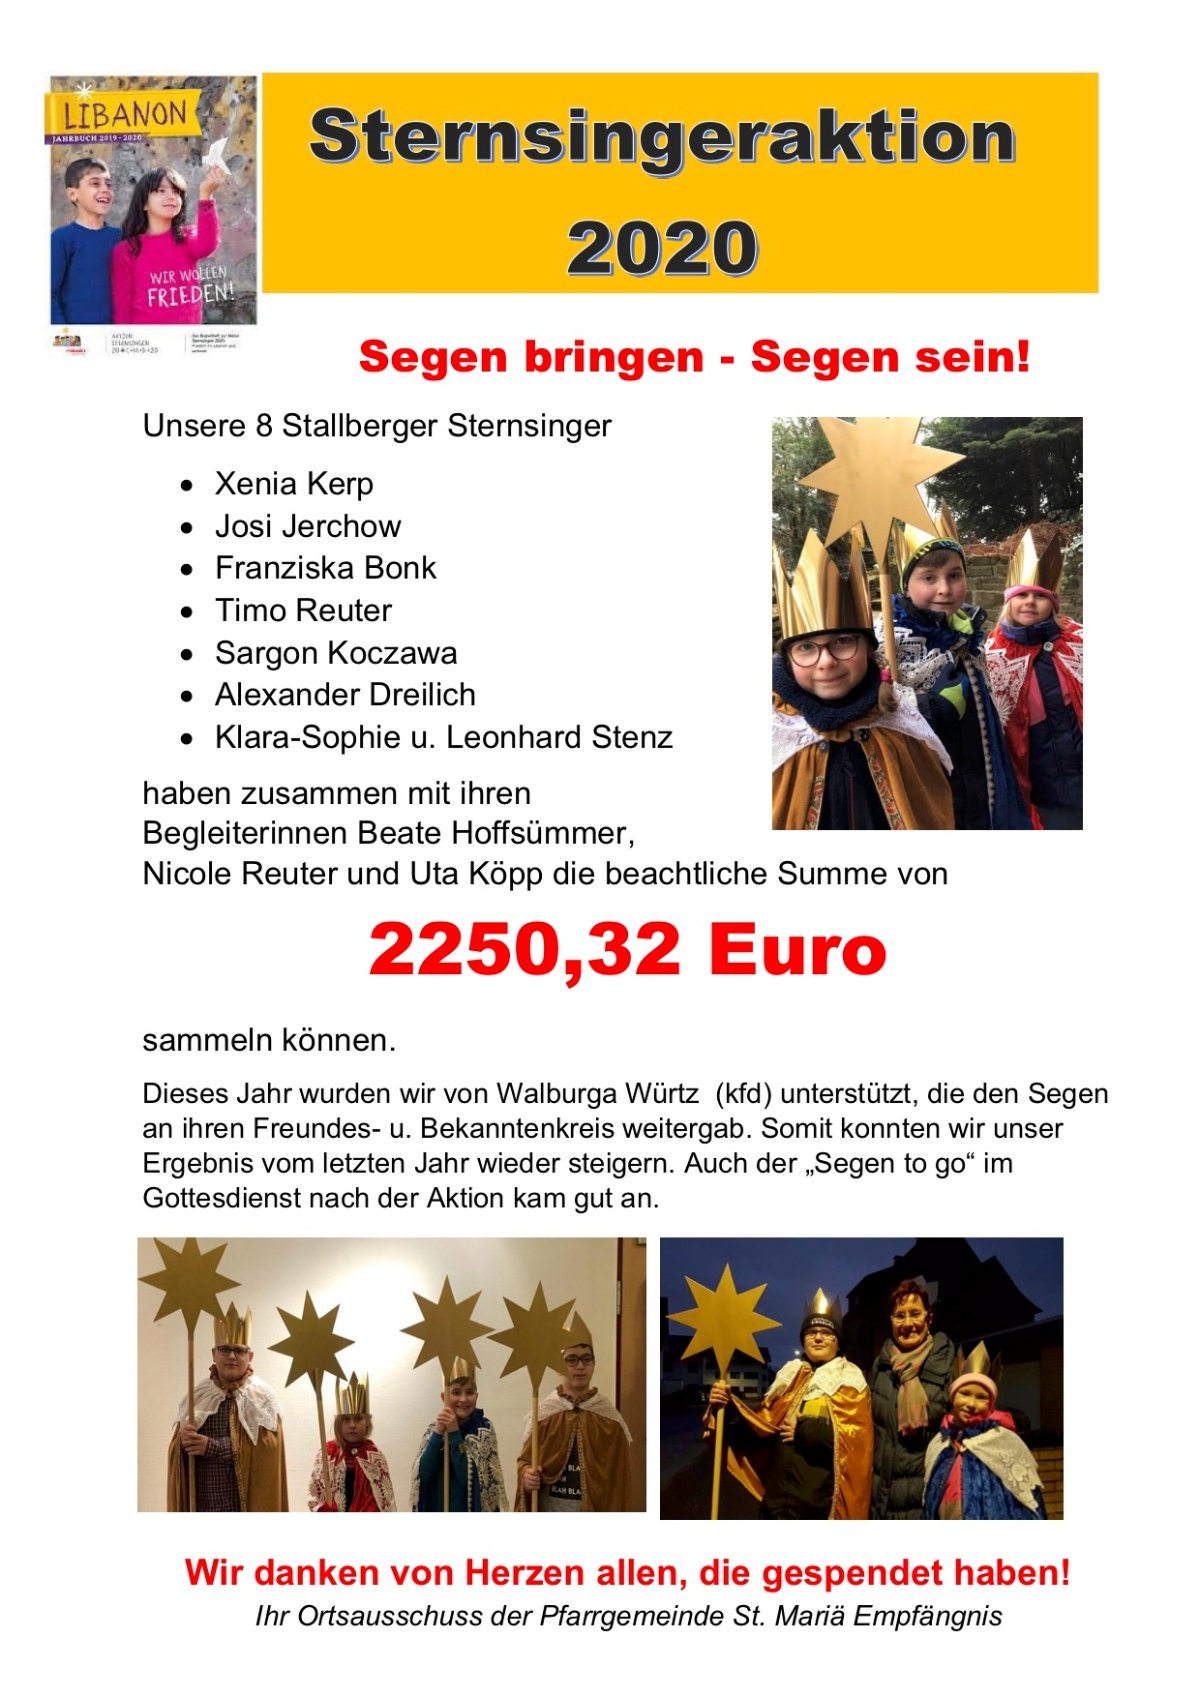 Ergebnisplakat der Stallberger Sternsinger-Aktion-2020 (c) Ut Köpp